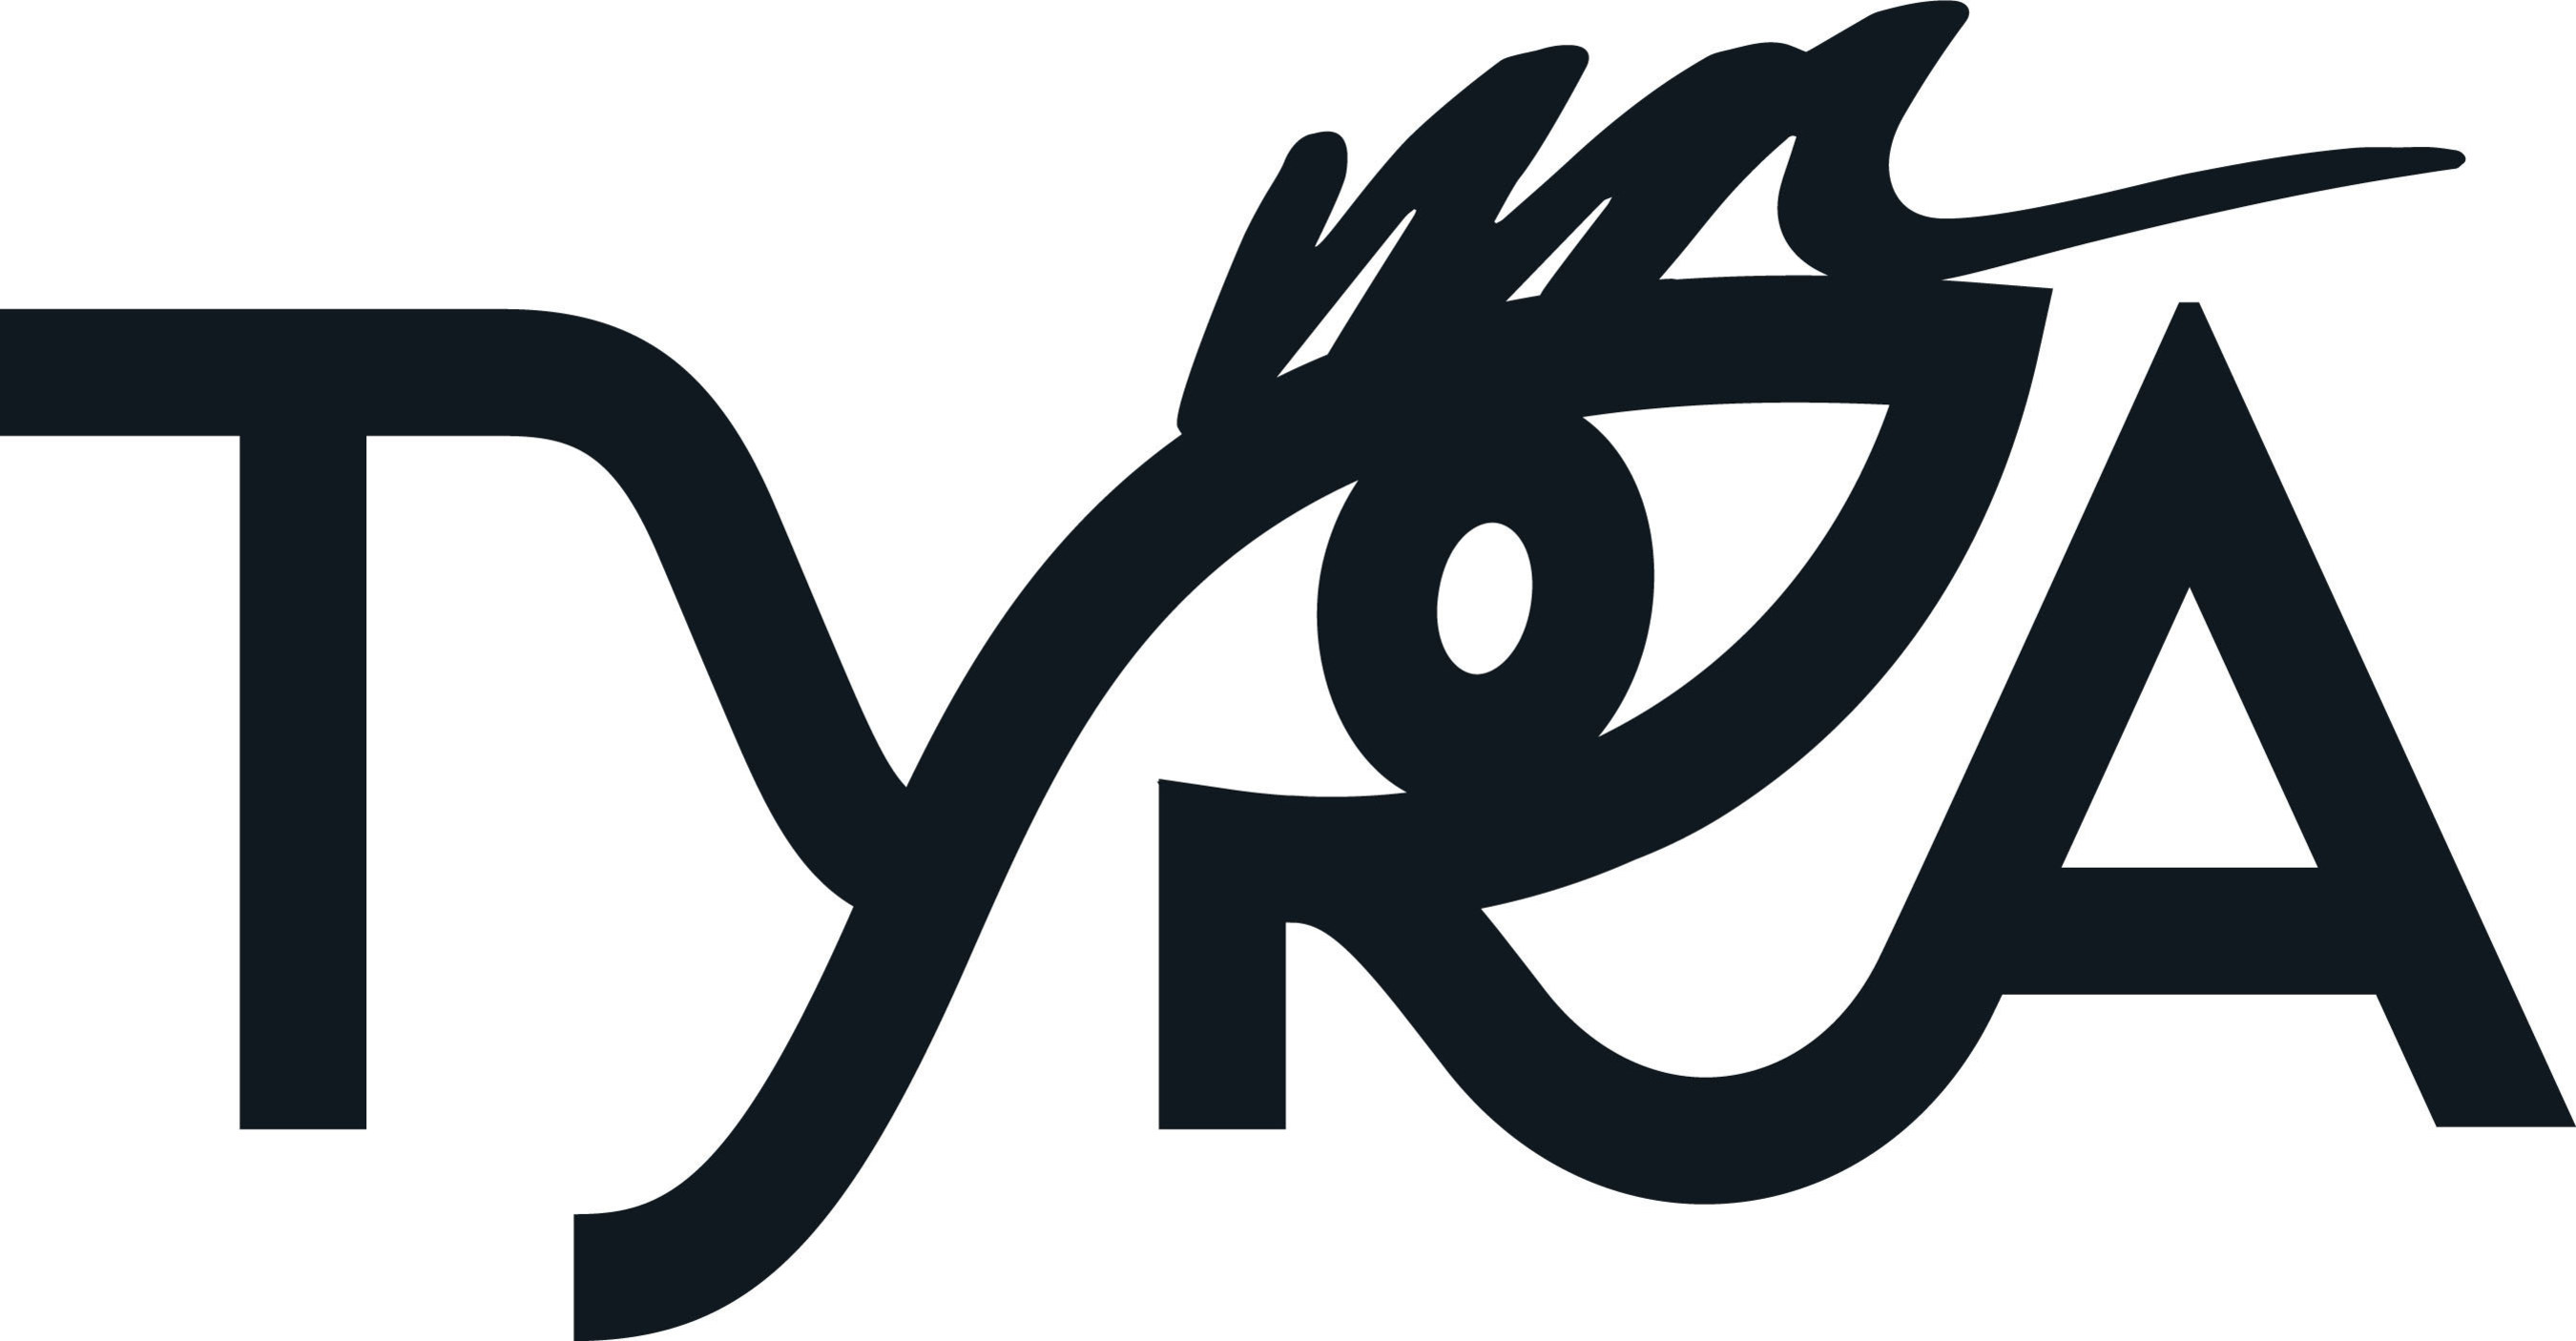 The TYRA logo has been designed to encapsulate Tyra's iconic smize (PRNewsFoto/TYRA beauty)